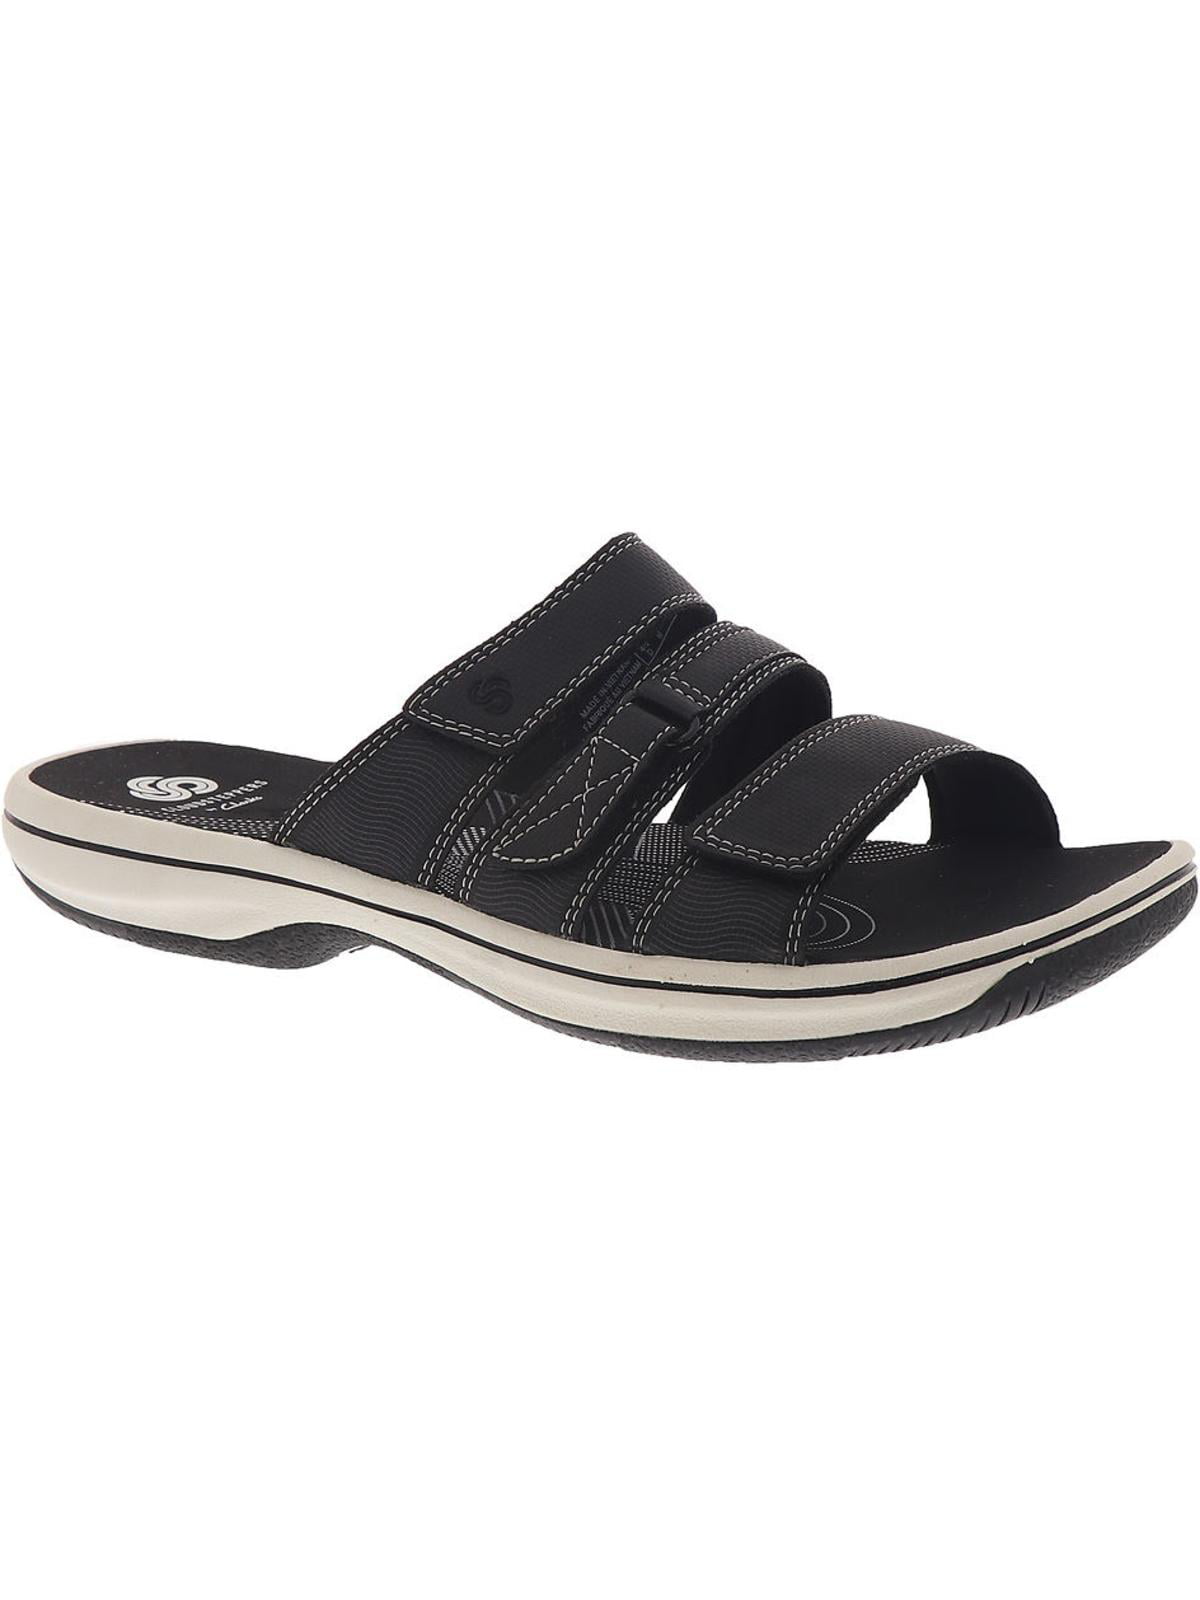 clarks brinkley coast women's slide sandals